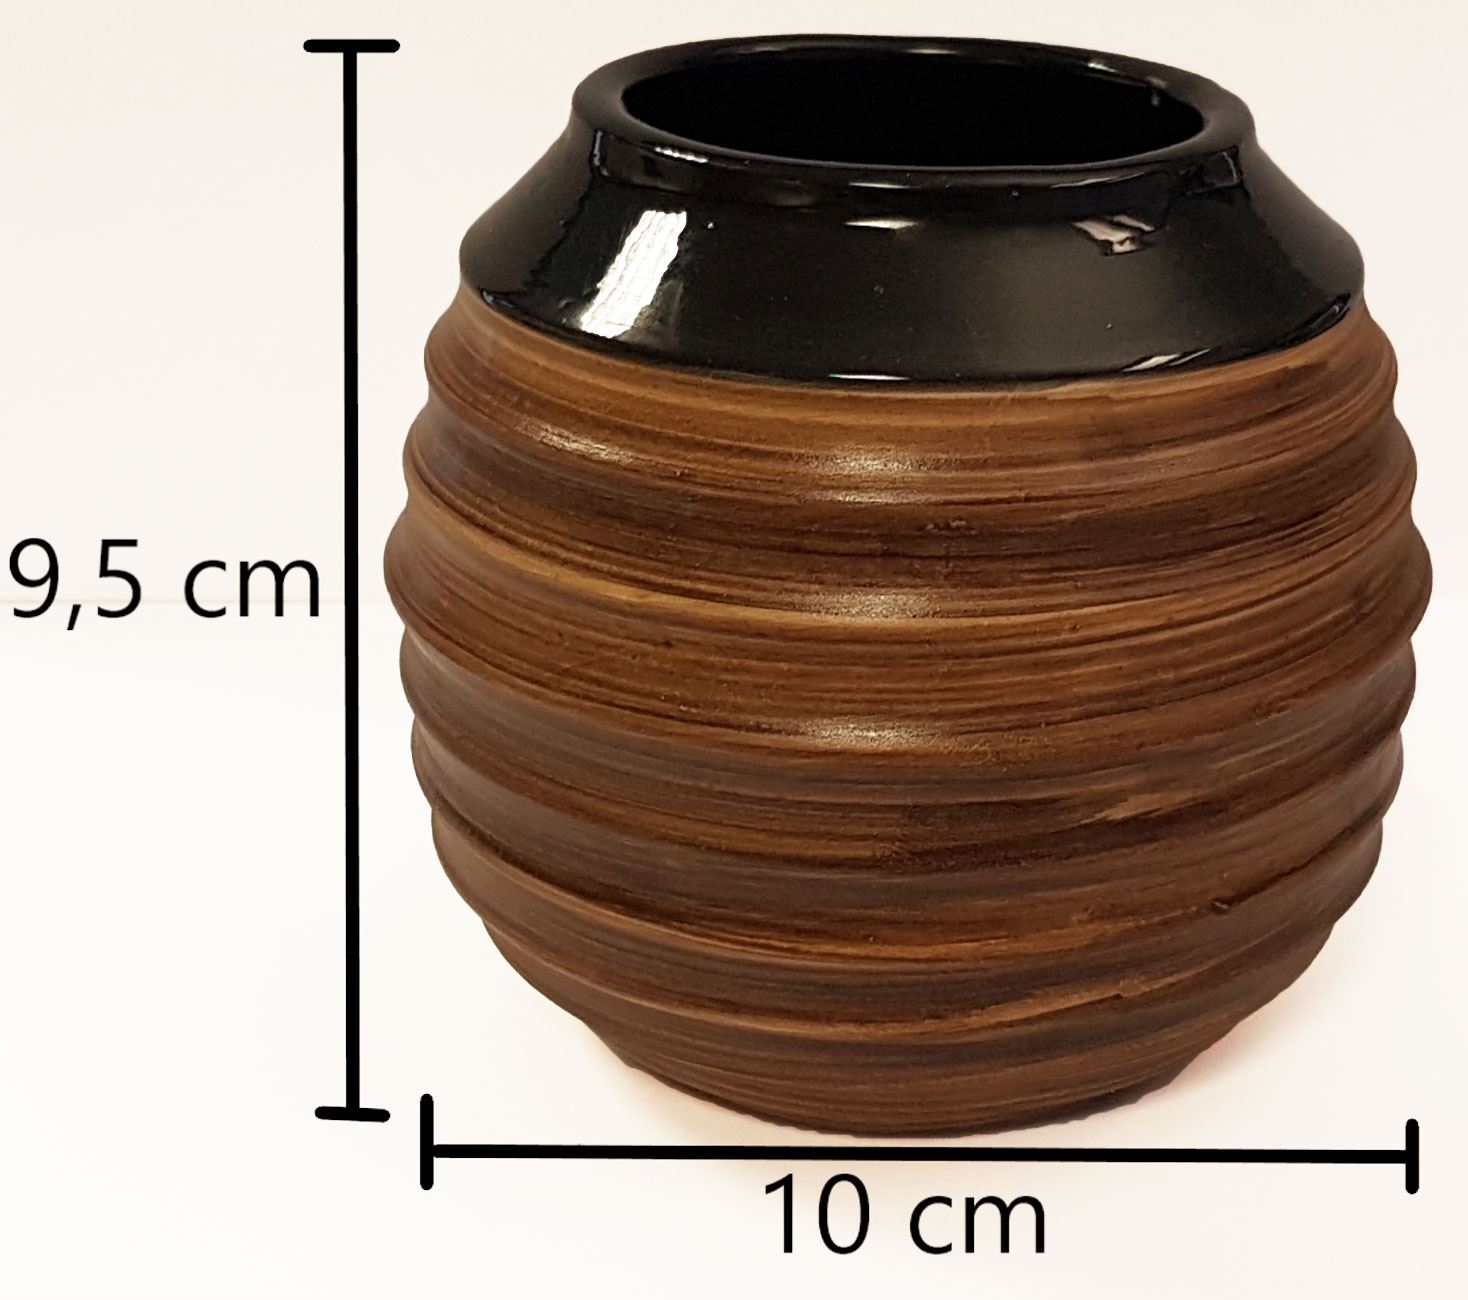 Mate drinking vessel Ceramic (dark)